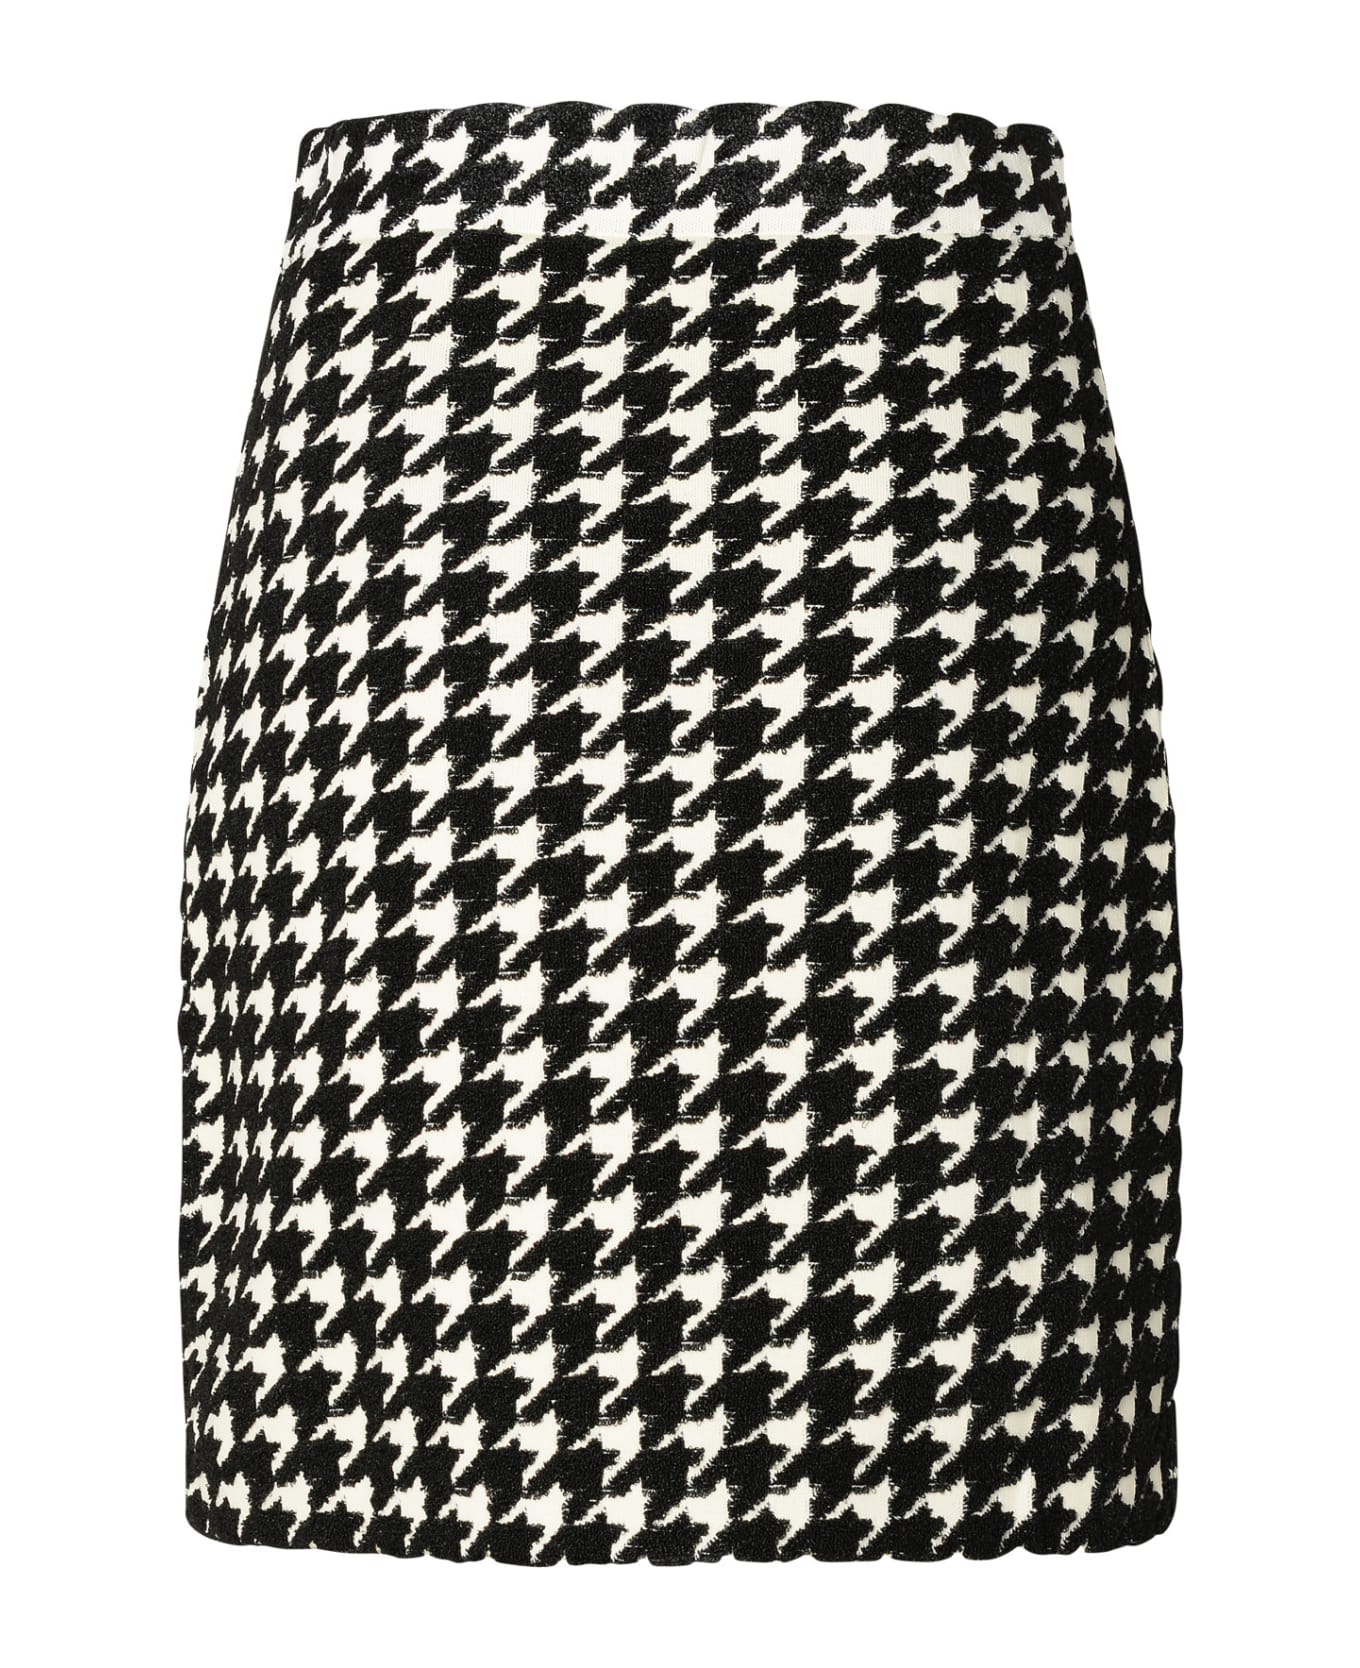 Burberry Black Viscose Blend Skirt - Multicolor